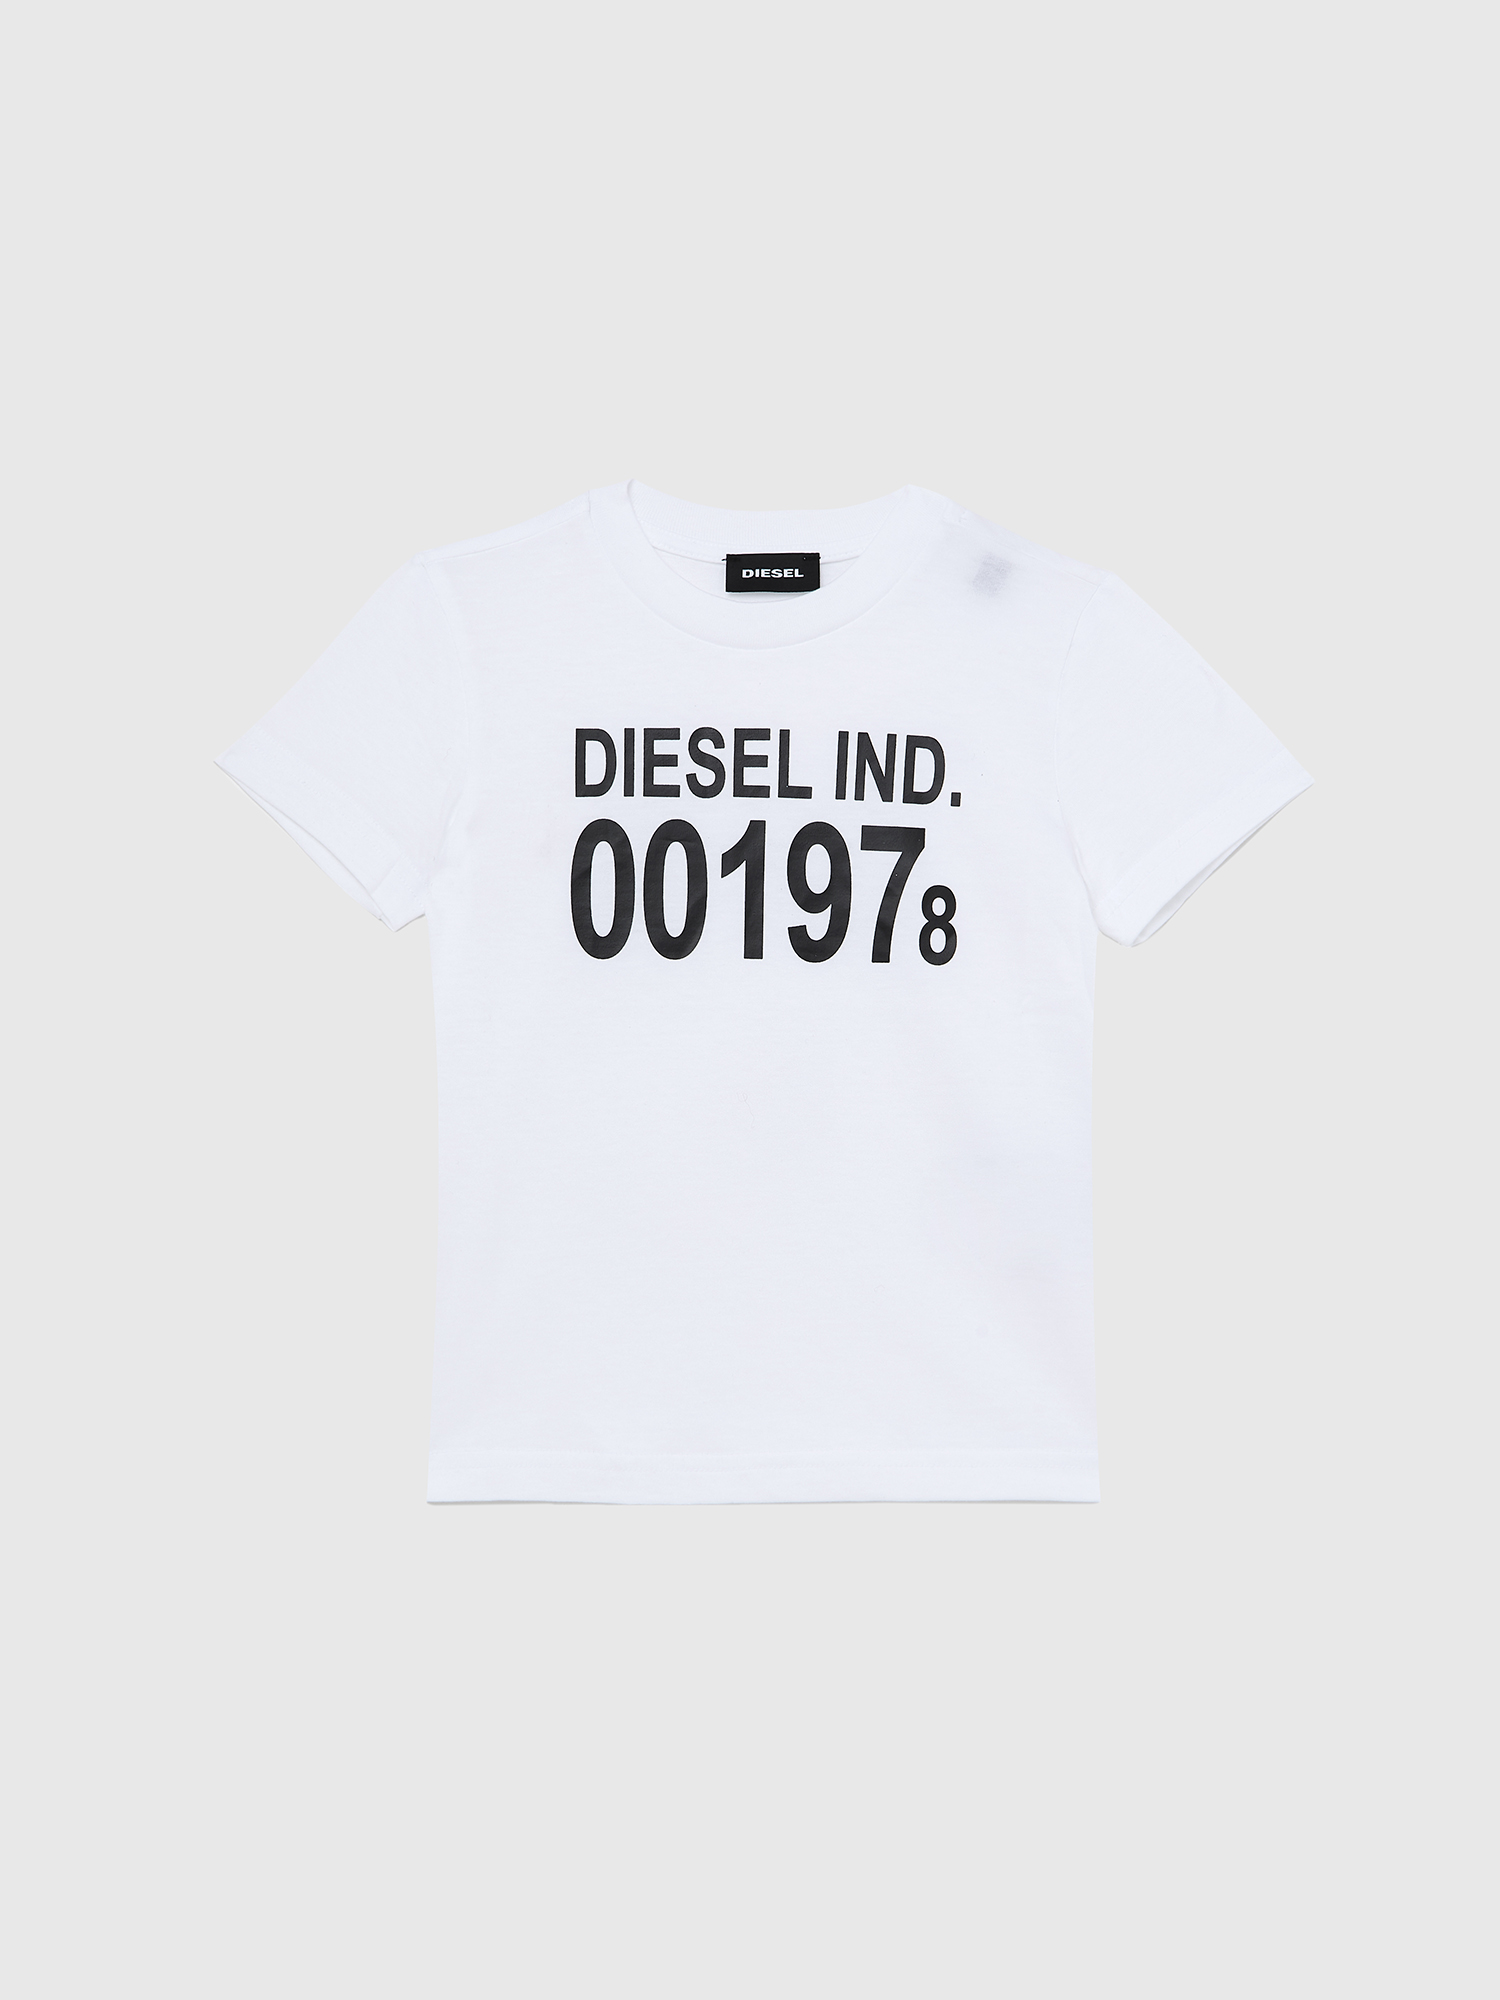 Diesel - TDIEGO001978B-R, White/Black - Image 1